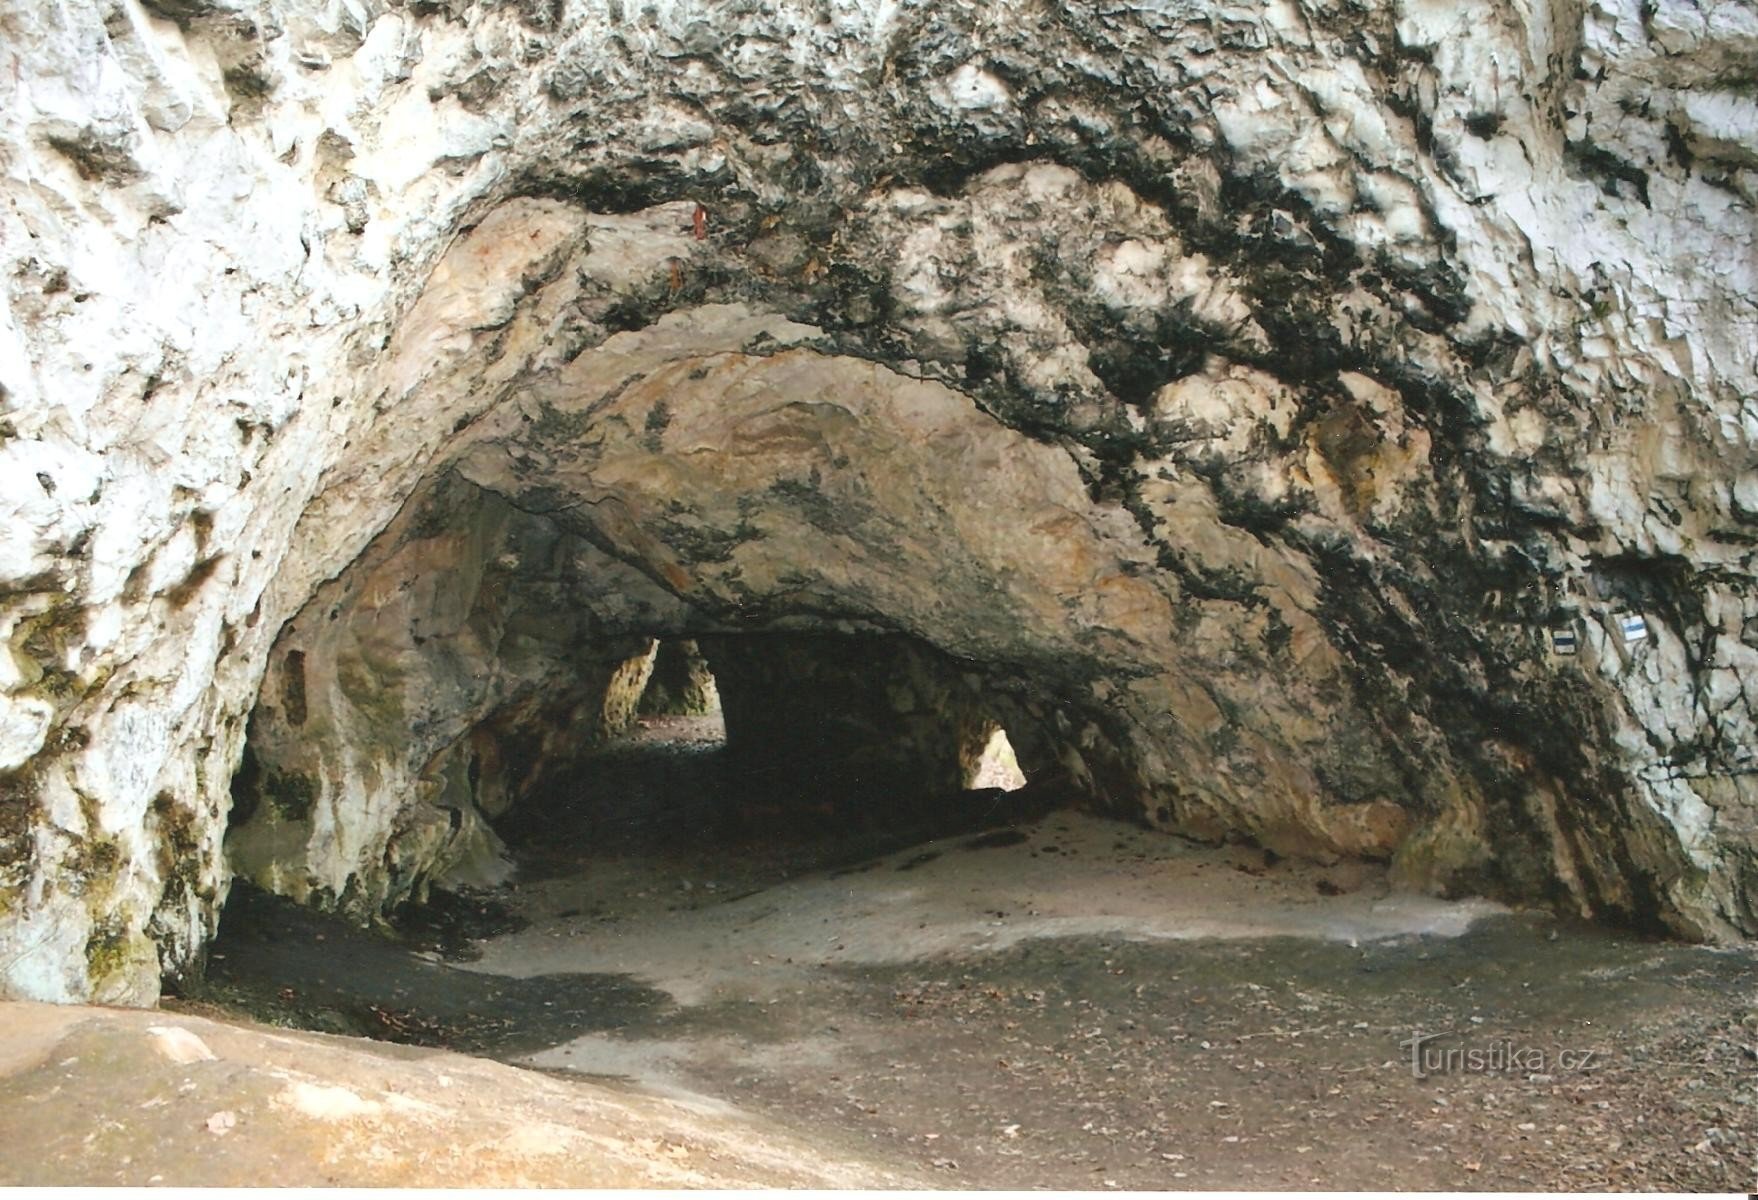 Cueva Jáchymka